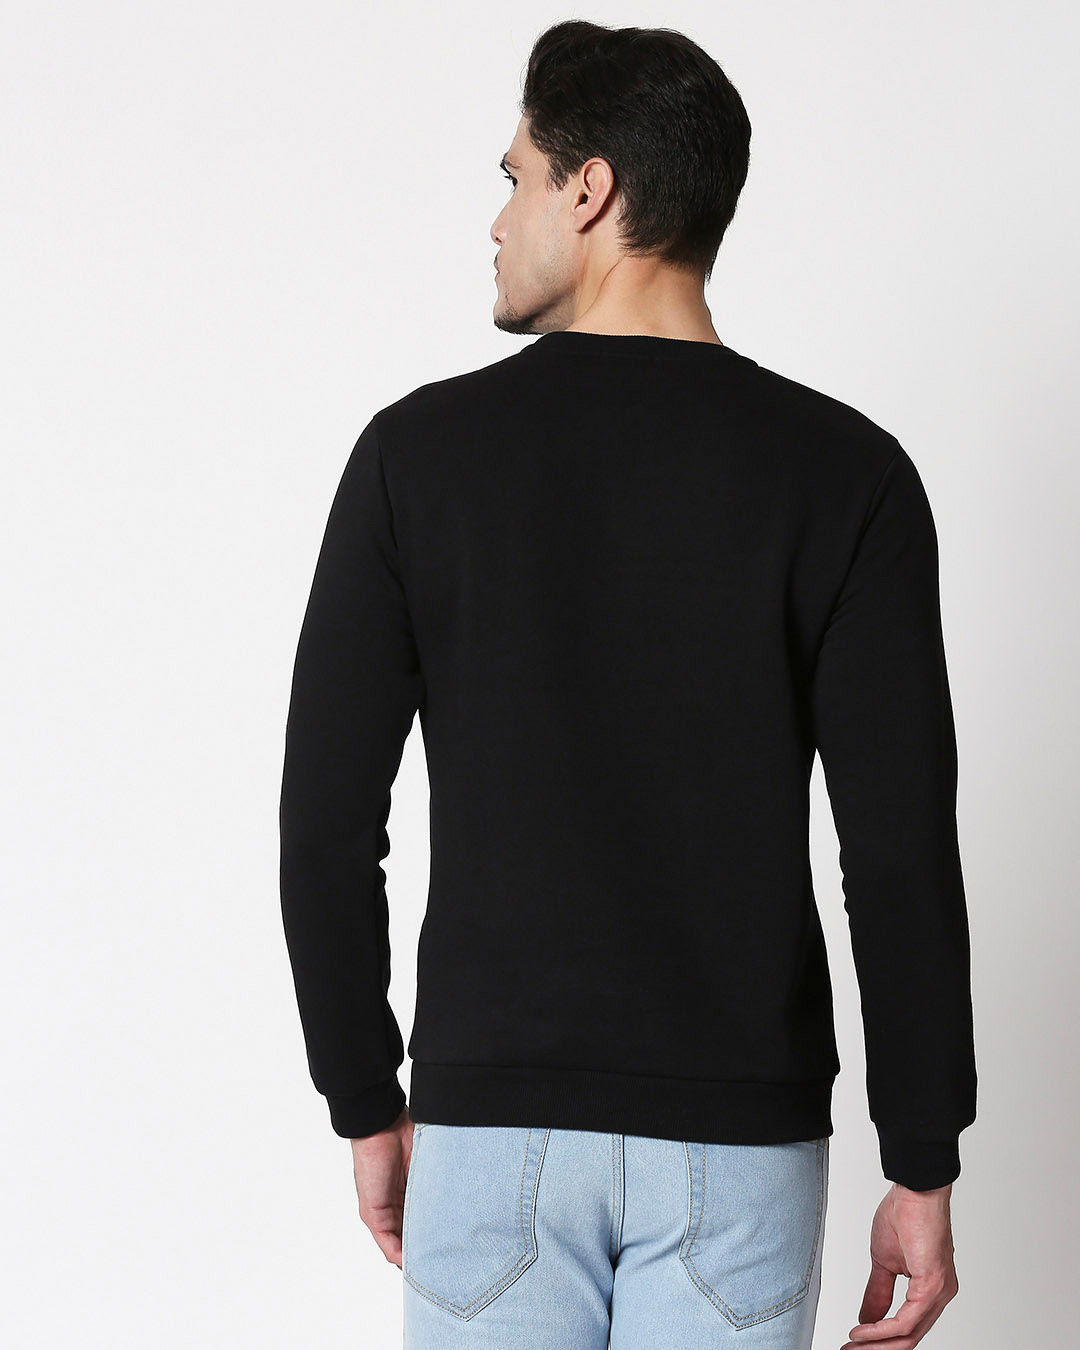 Shop Escape To Outdoors Fleece Sweatshirt Black-Back